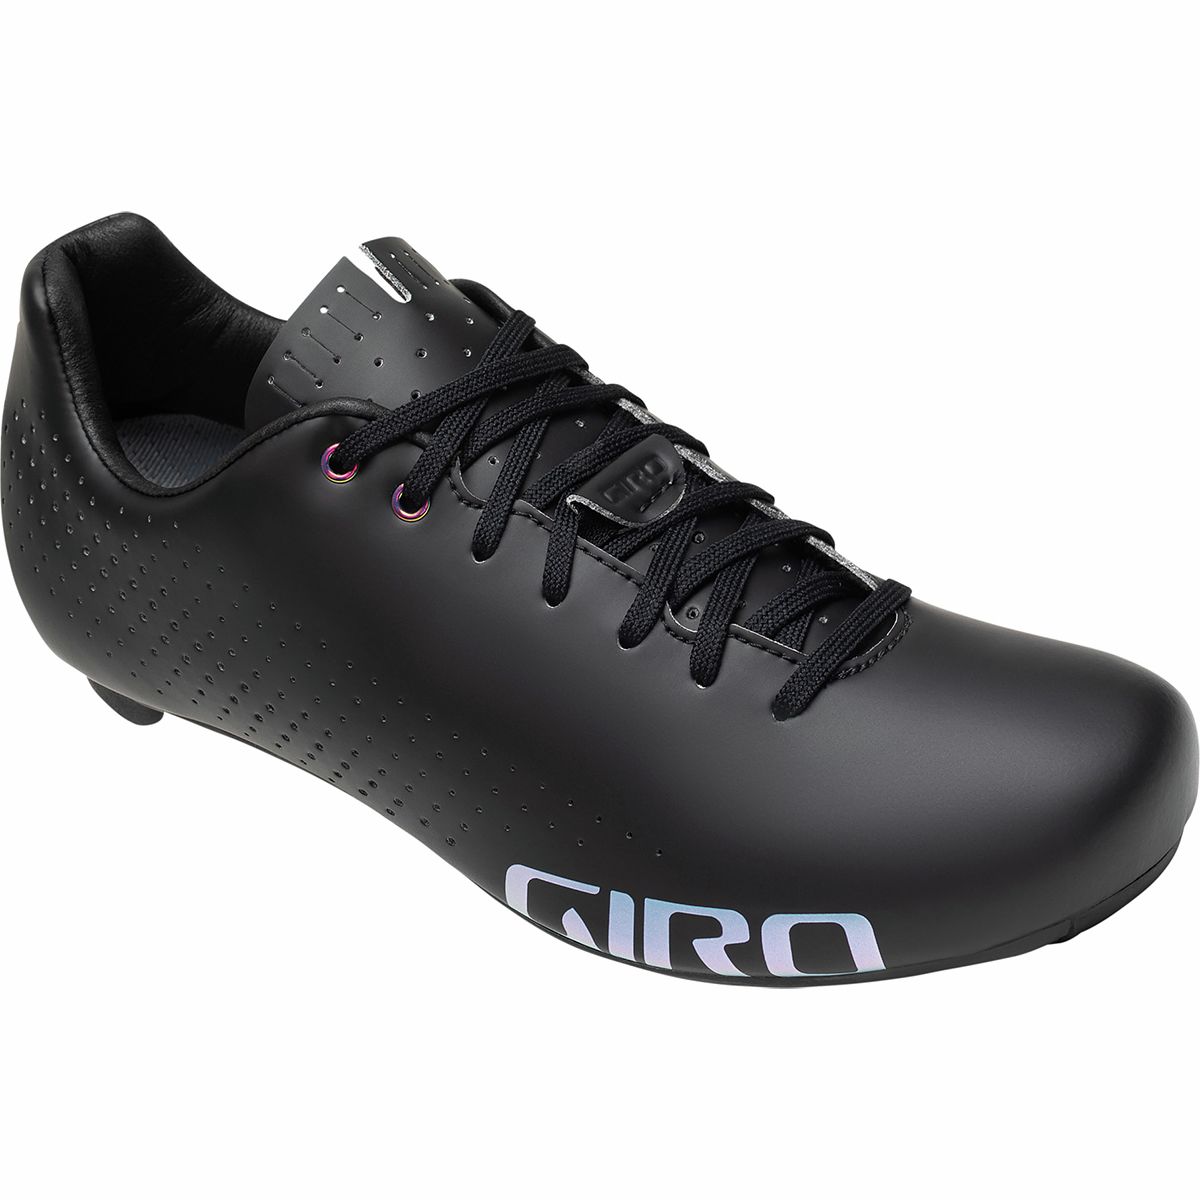 Велосипедные кроссовки Giro Empire ACC Giro